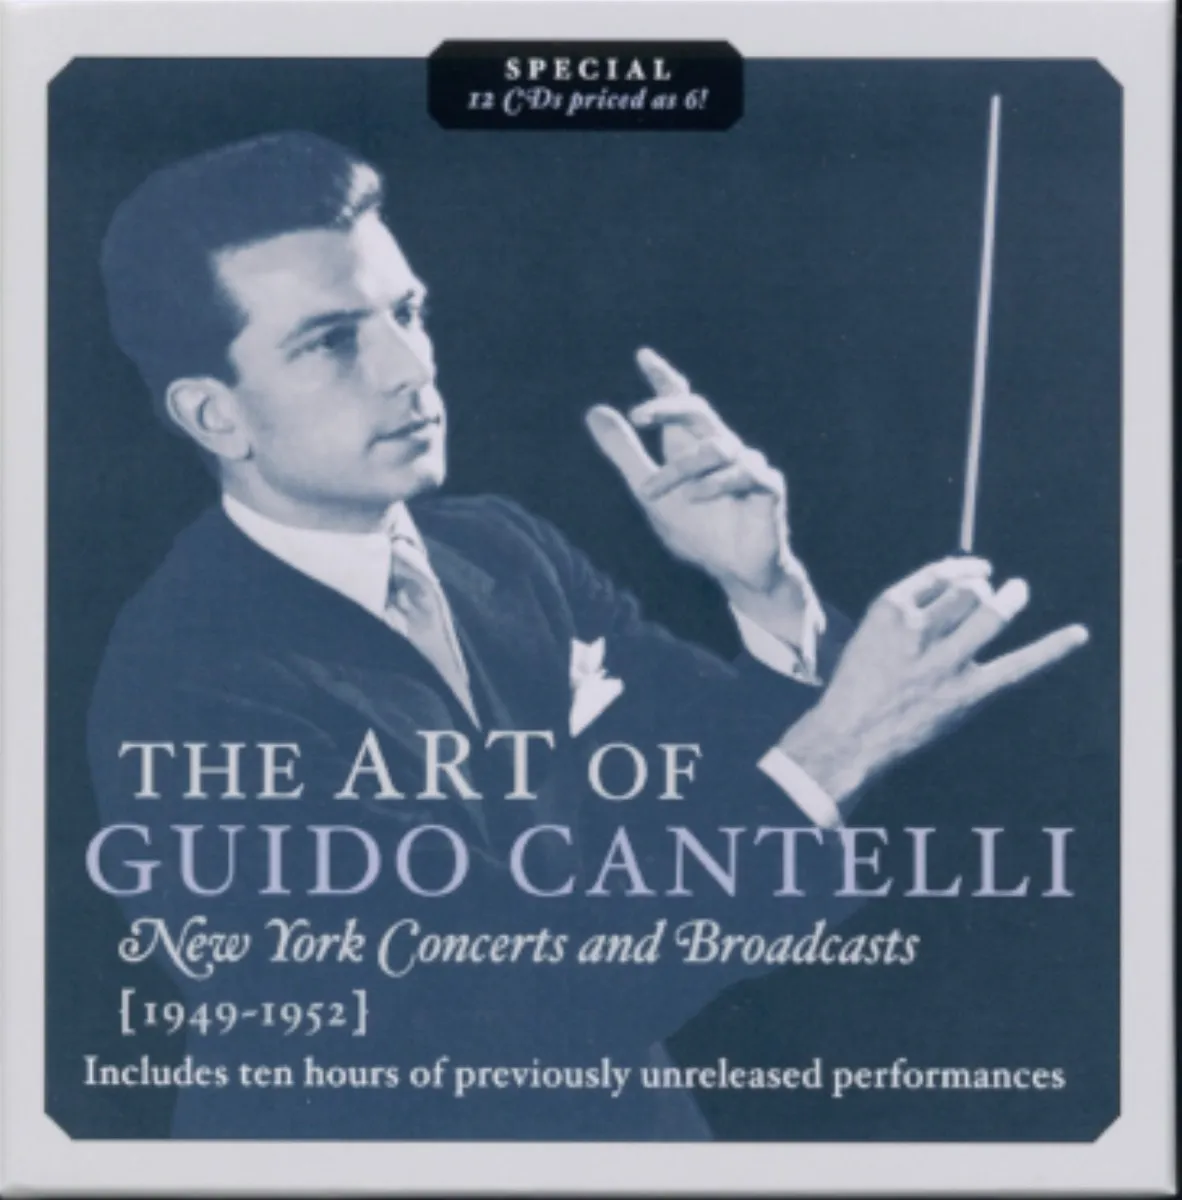 The Art of Guido Cantelli - Music u0026 Arts: MACD1120 - 12 CDs | Presto Music